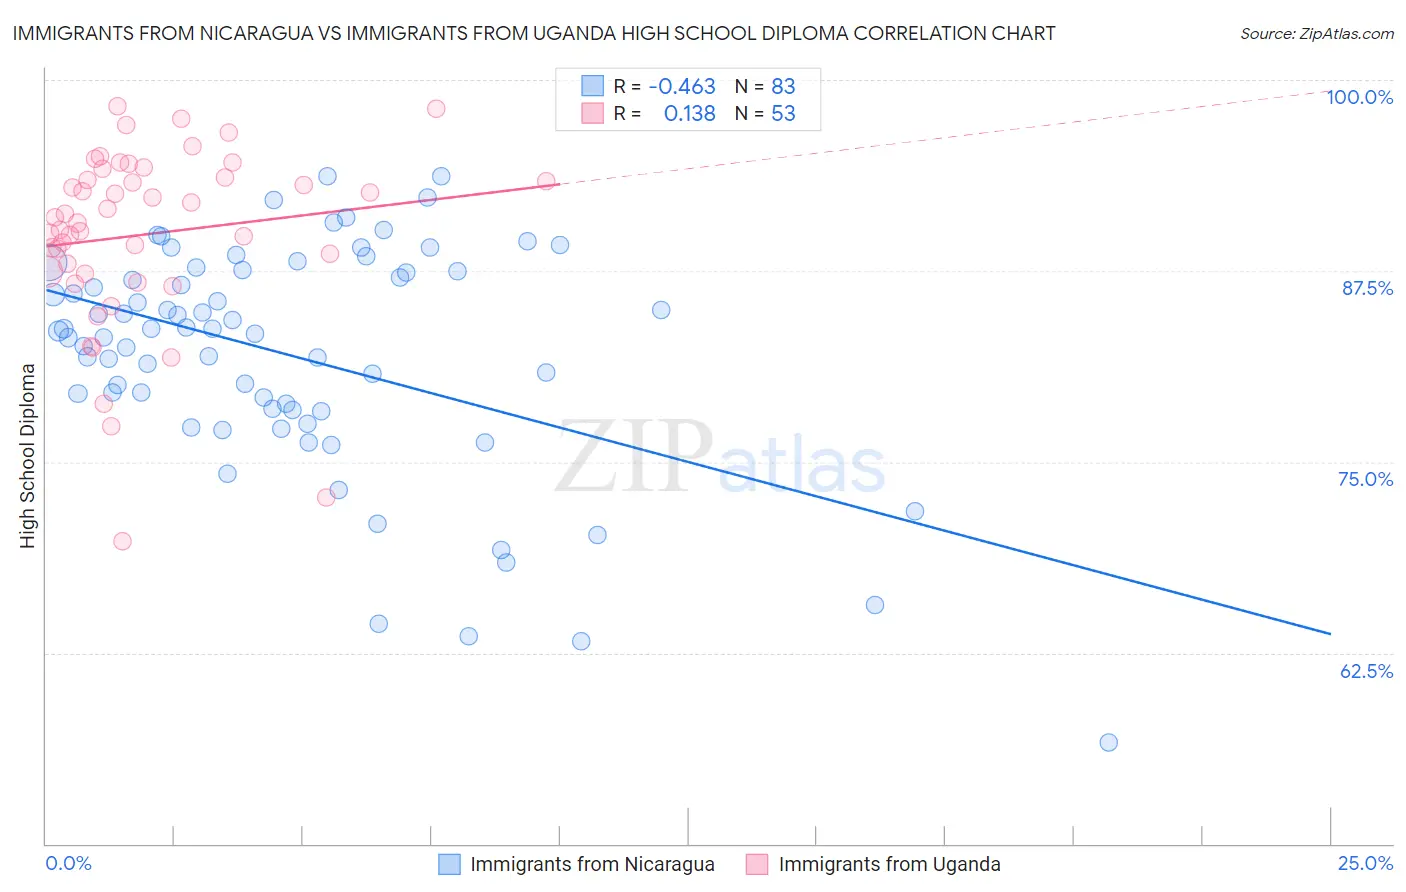 Immigrants from Nicaragua vs Immigrants from Uganda High School Diploma